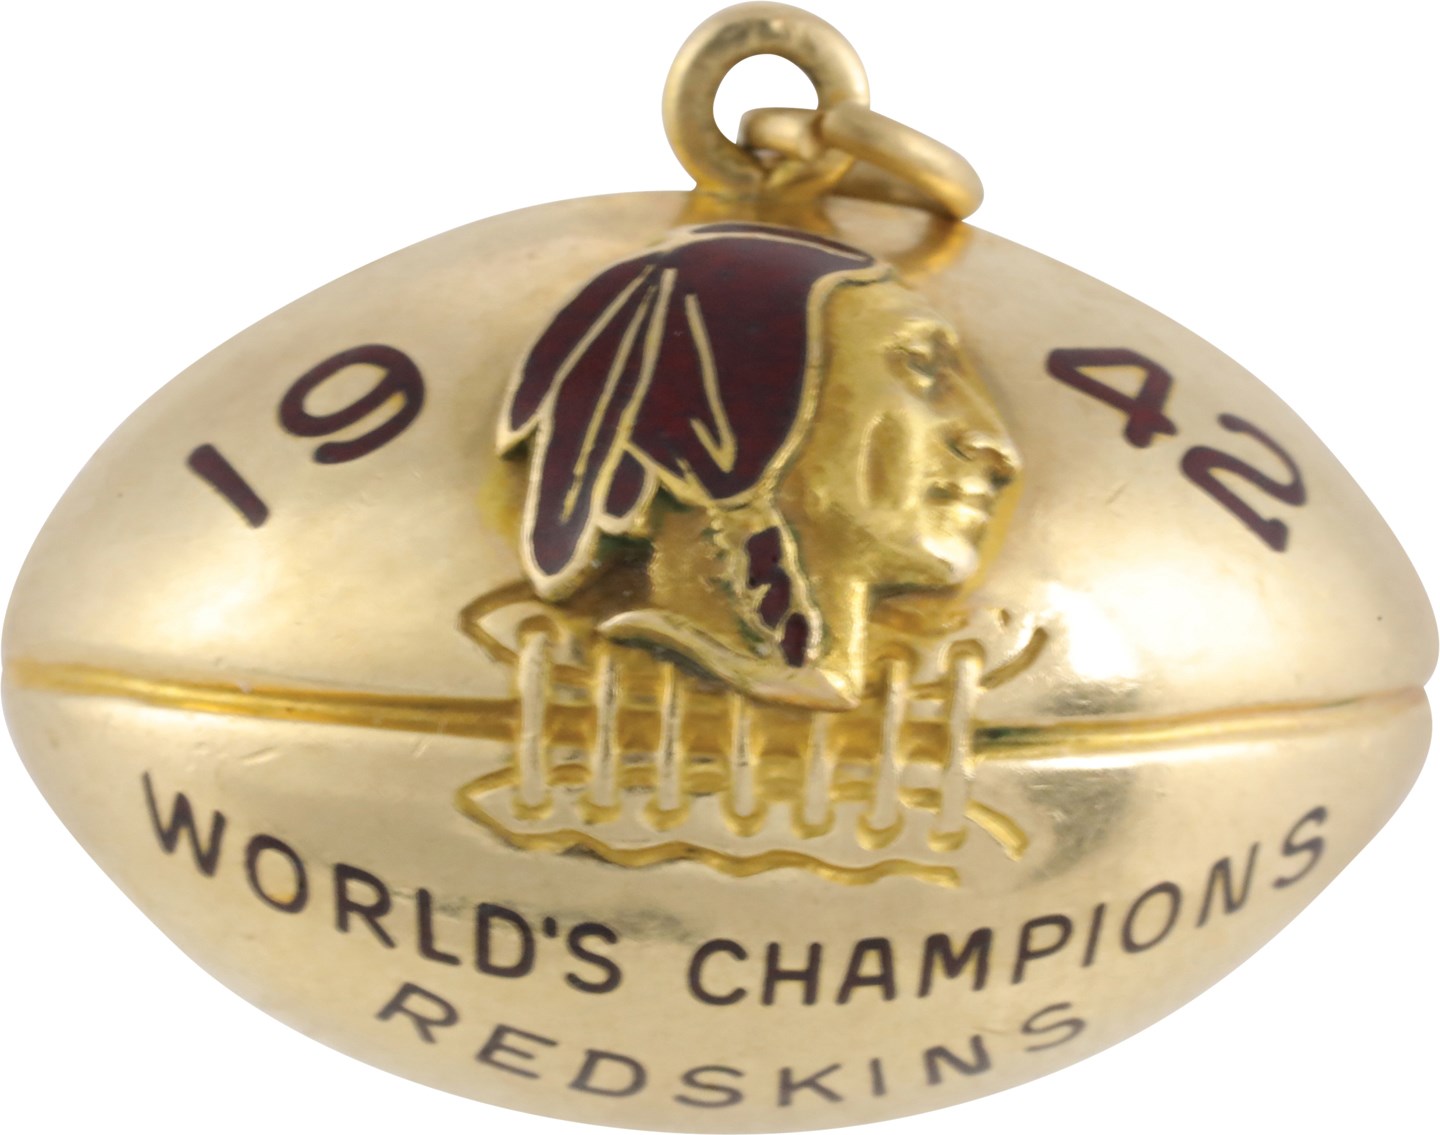 1942 Washington Redskins NFL Championship Fob Presented to Arch McDonald